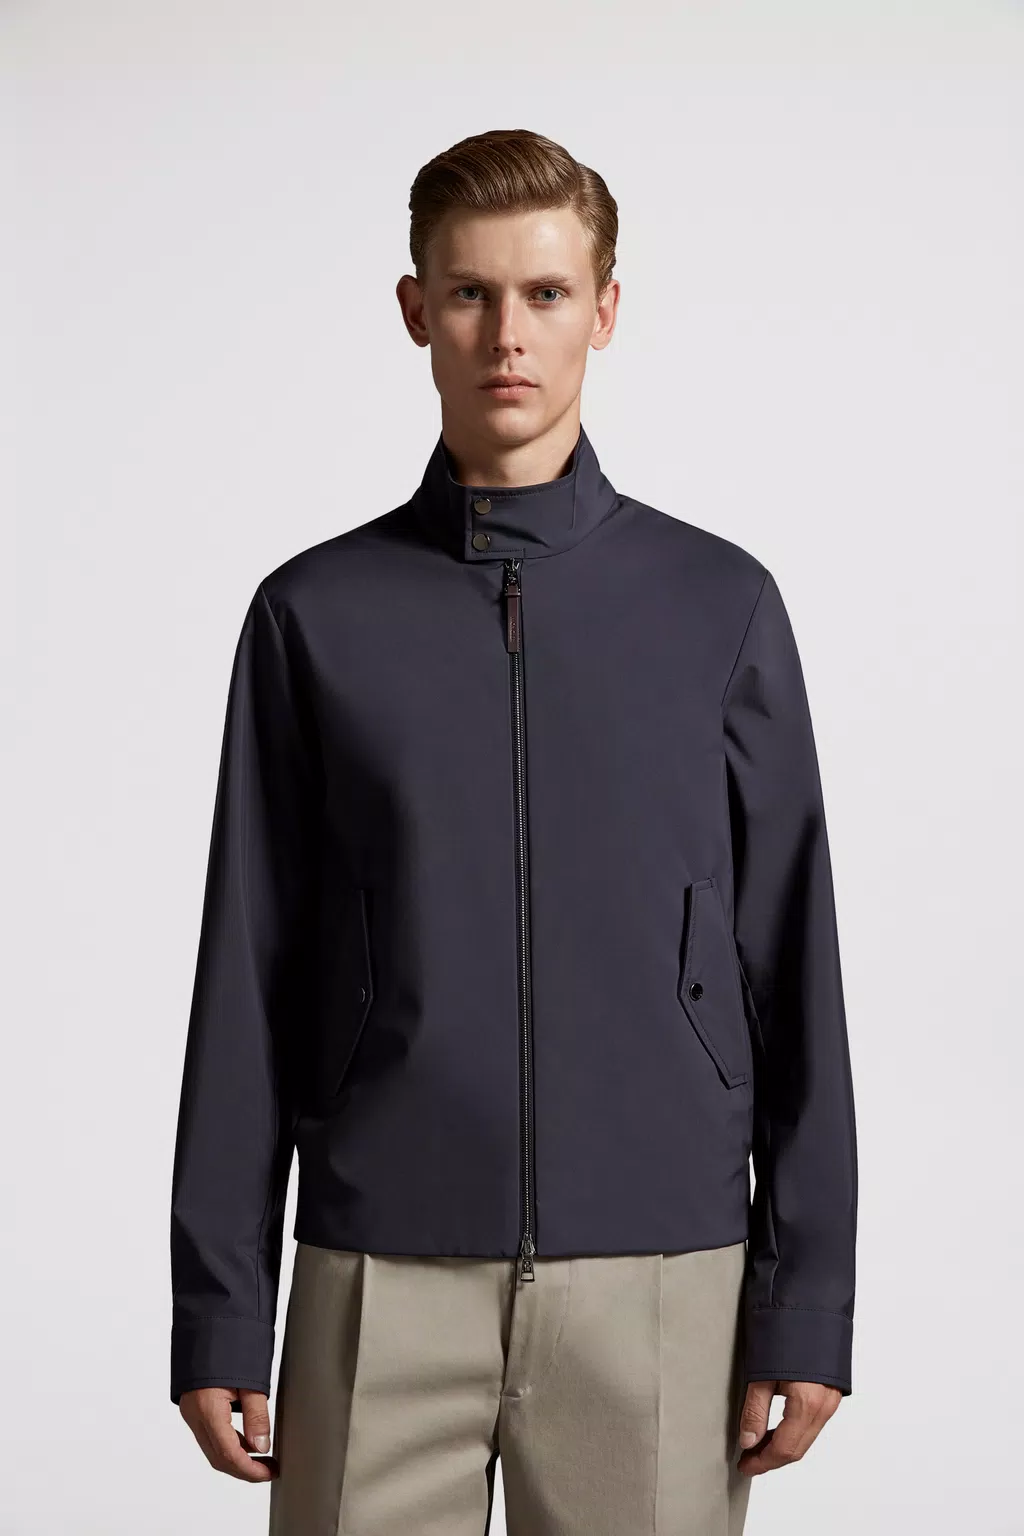 Coats & Jackets for Men - Outerwear | Moncler US